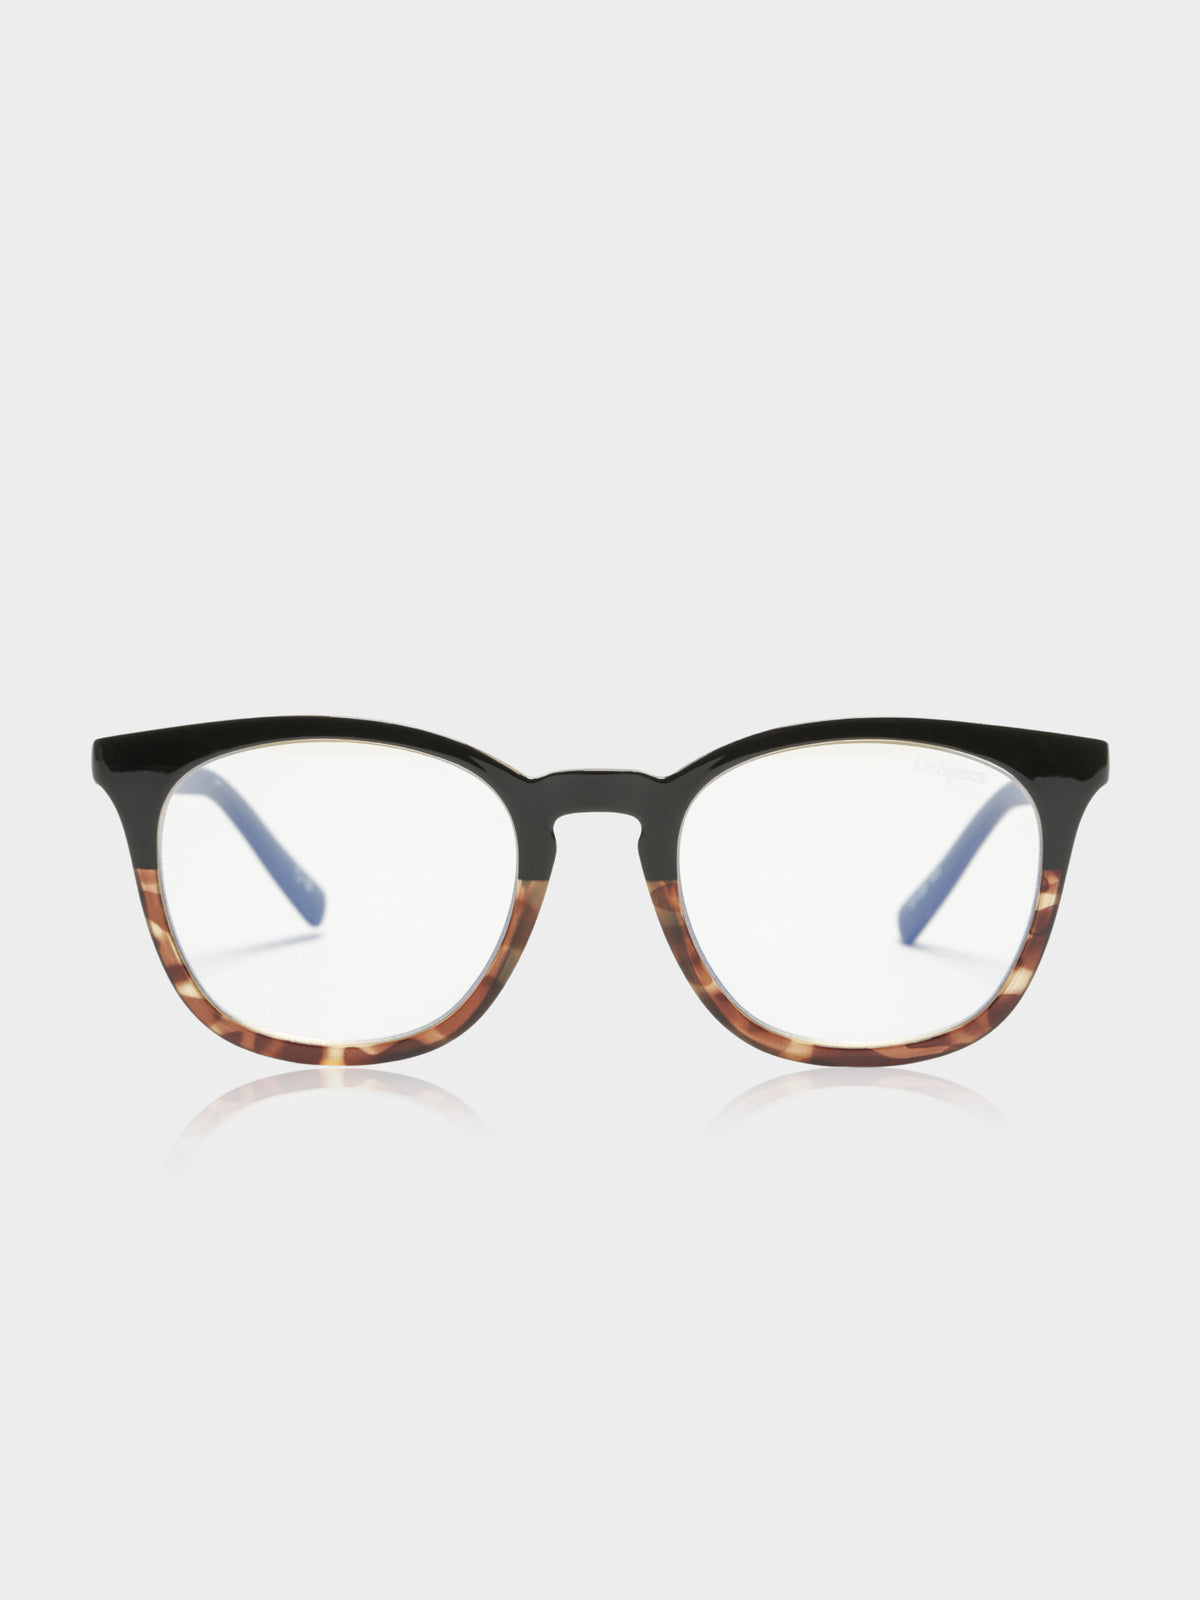 Fine Specimen Blue Light Glasses in Black &amp; Brown